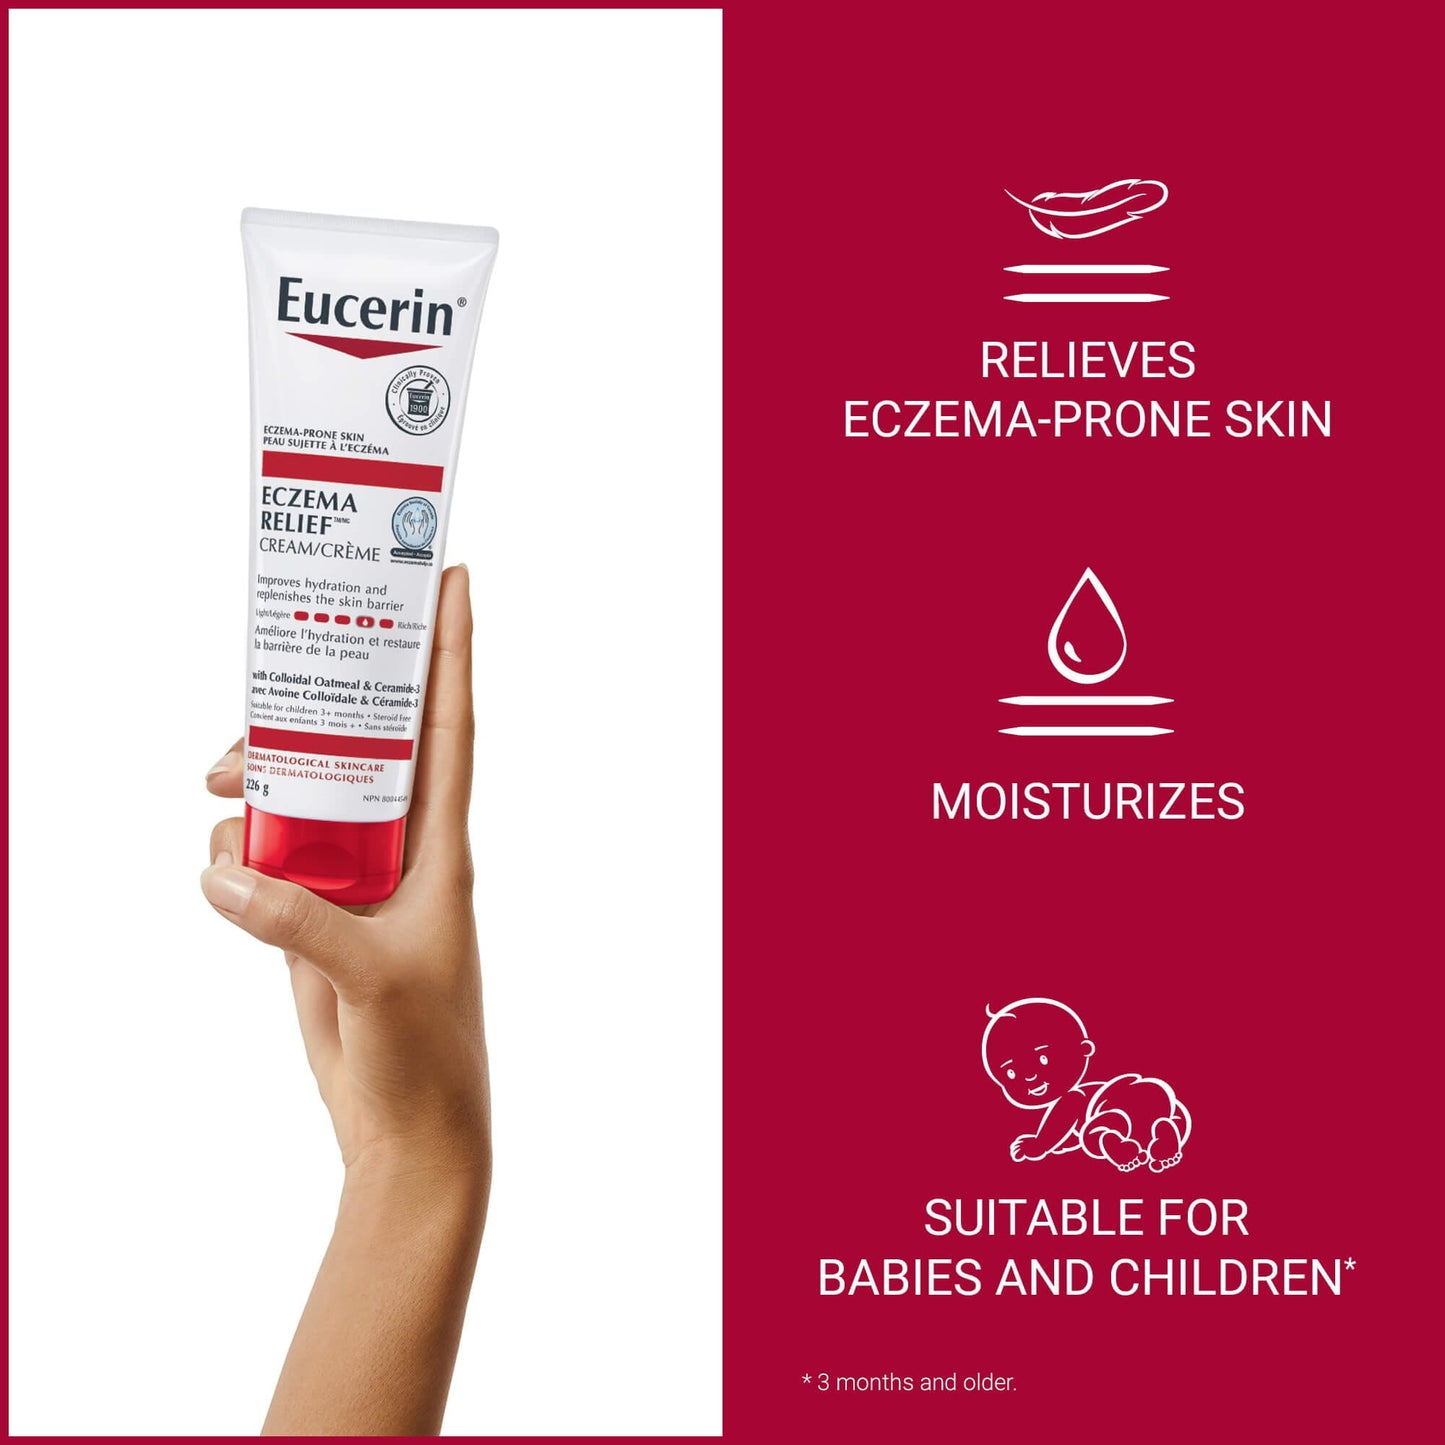 Eucerin - Eczema Relief Body Cream | 226 g